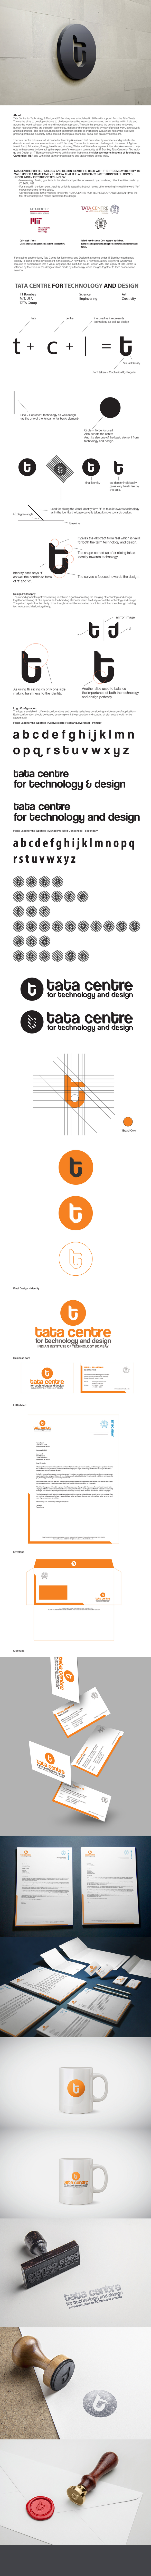 visual identity type design innovation centre MIT tata